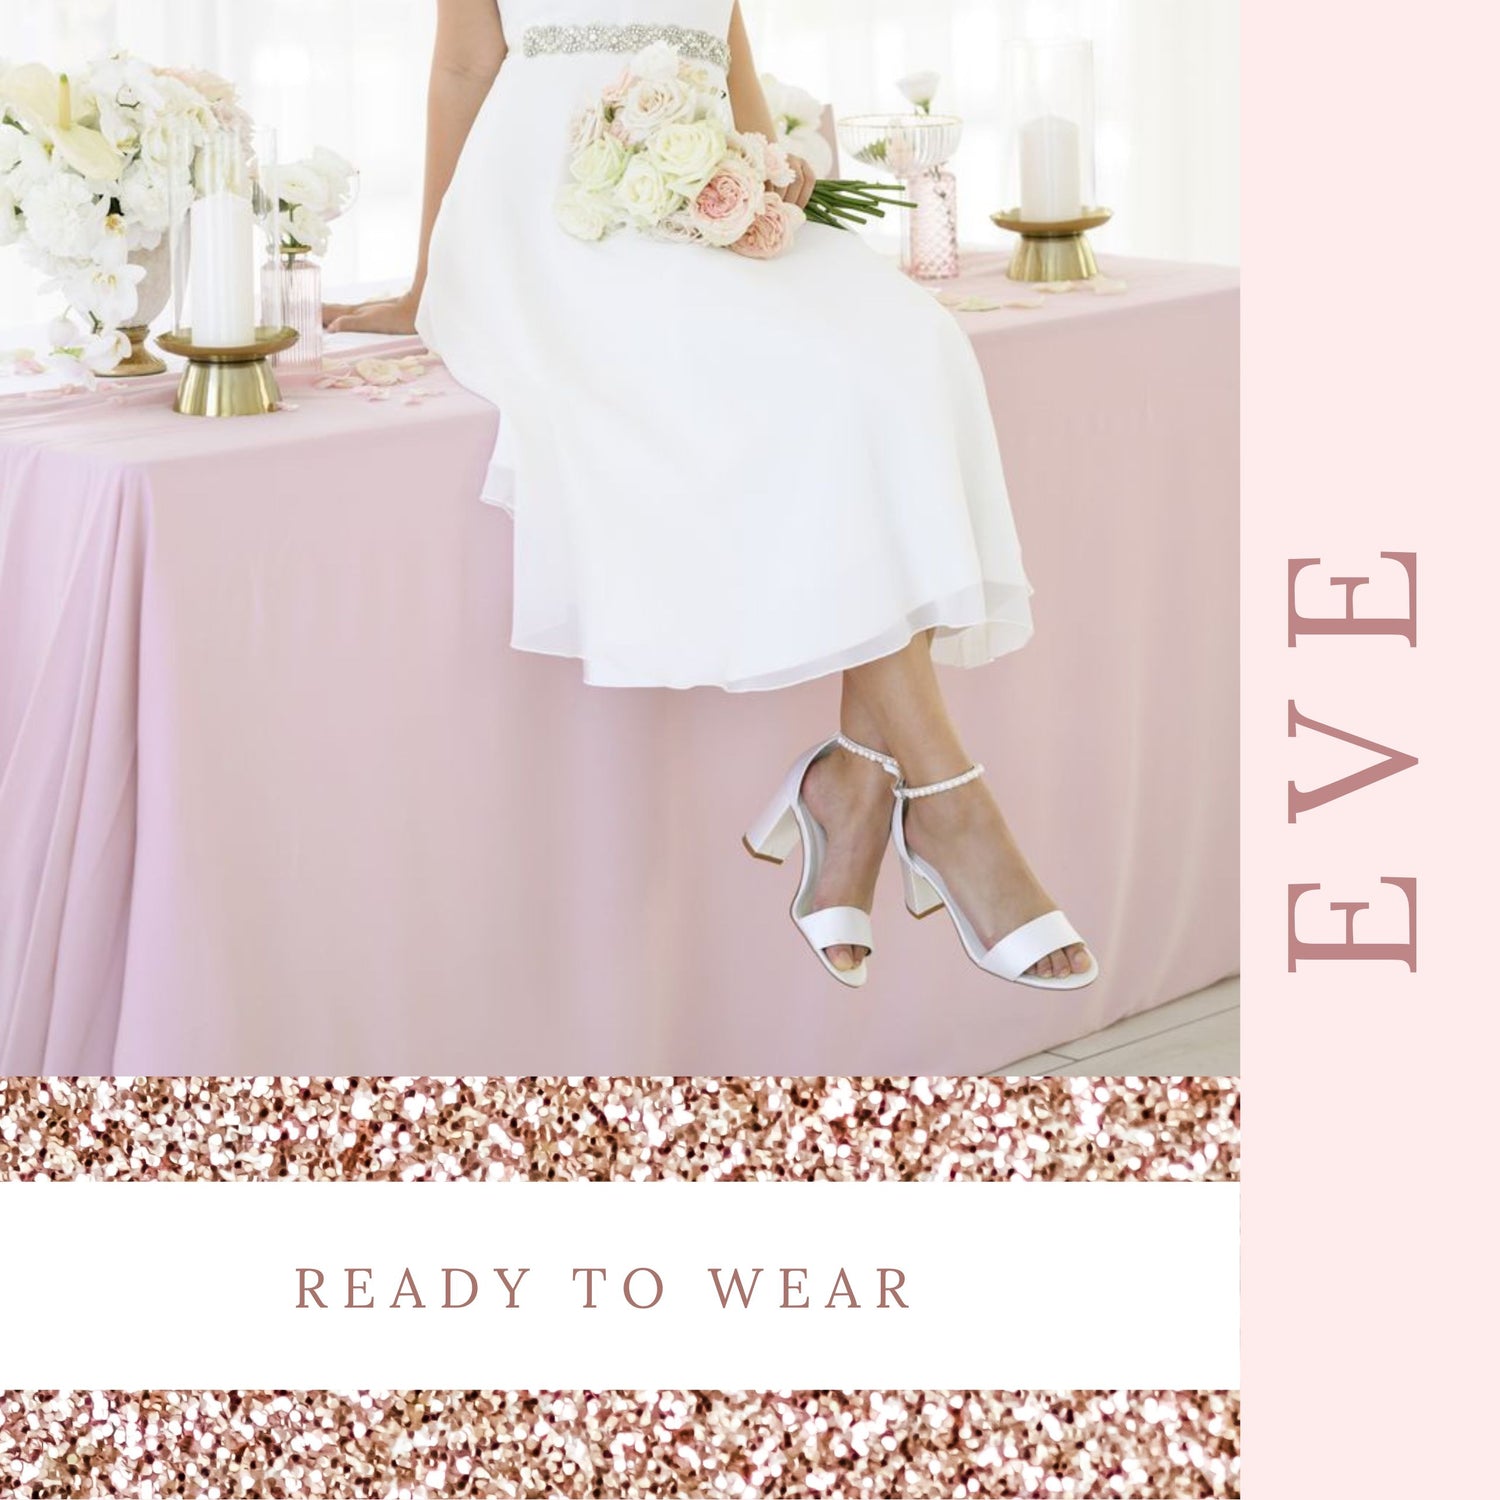 ivory-block-heel-wedding-shoes